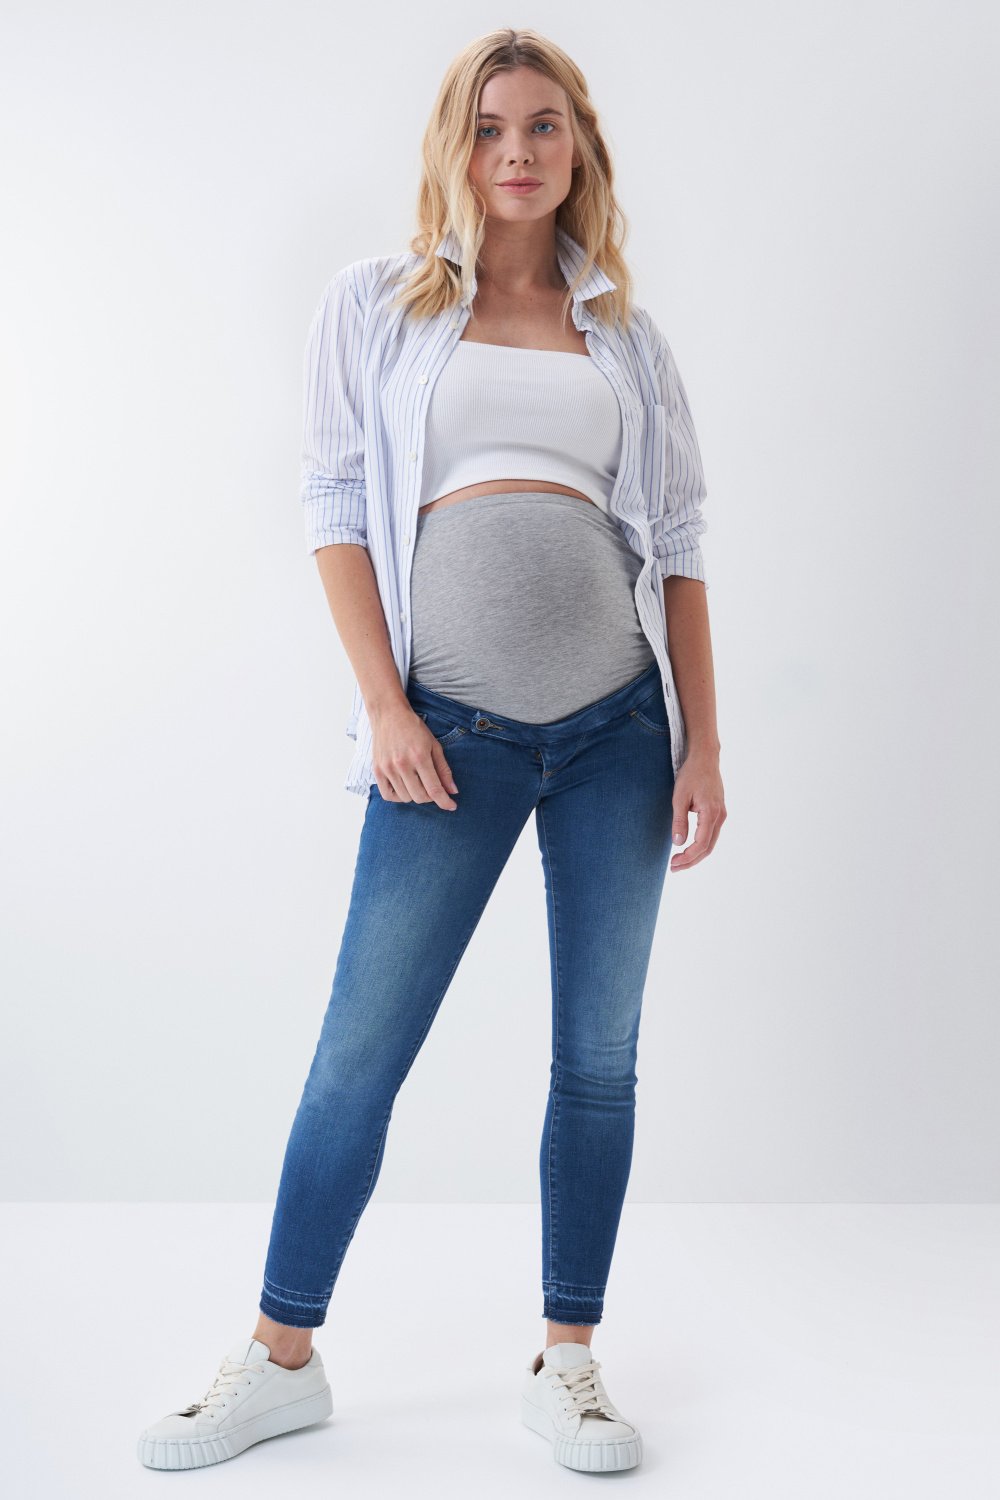 Jeans Maternity Hope, cropped hose, mittlerer Farbton - Salsa